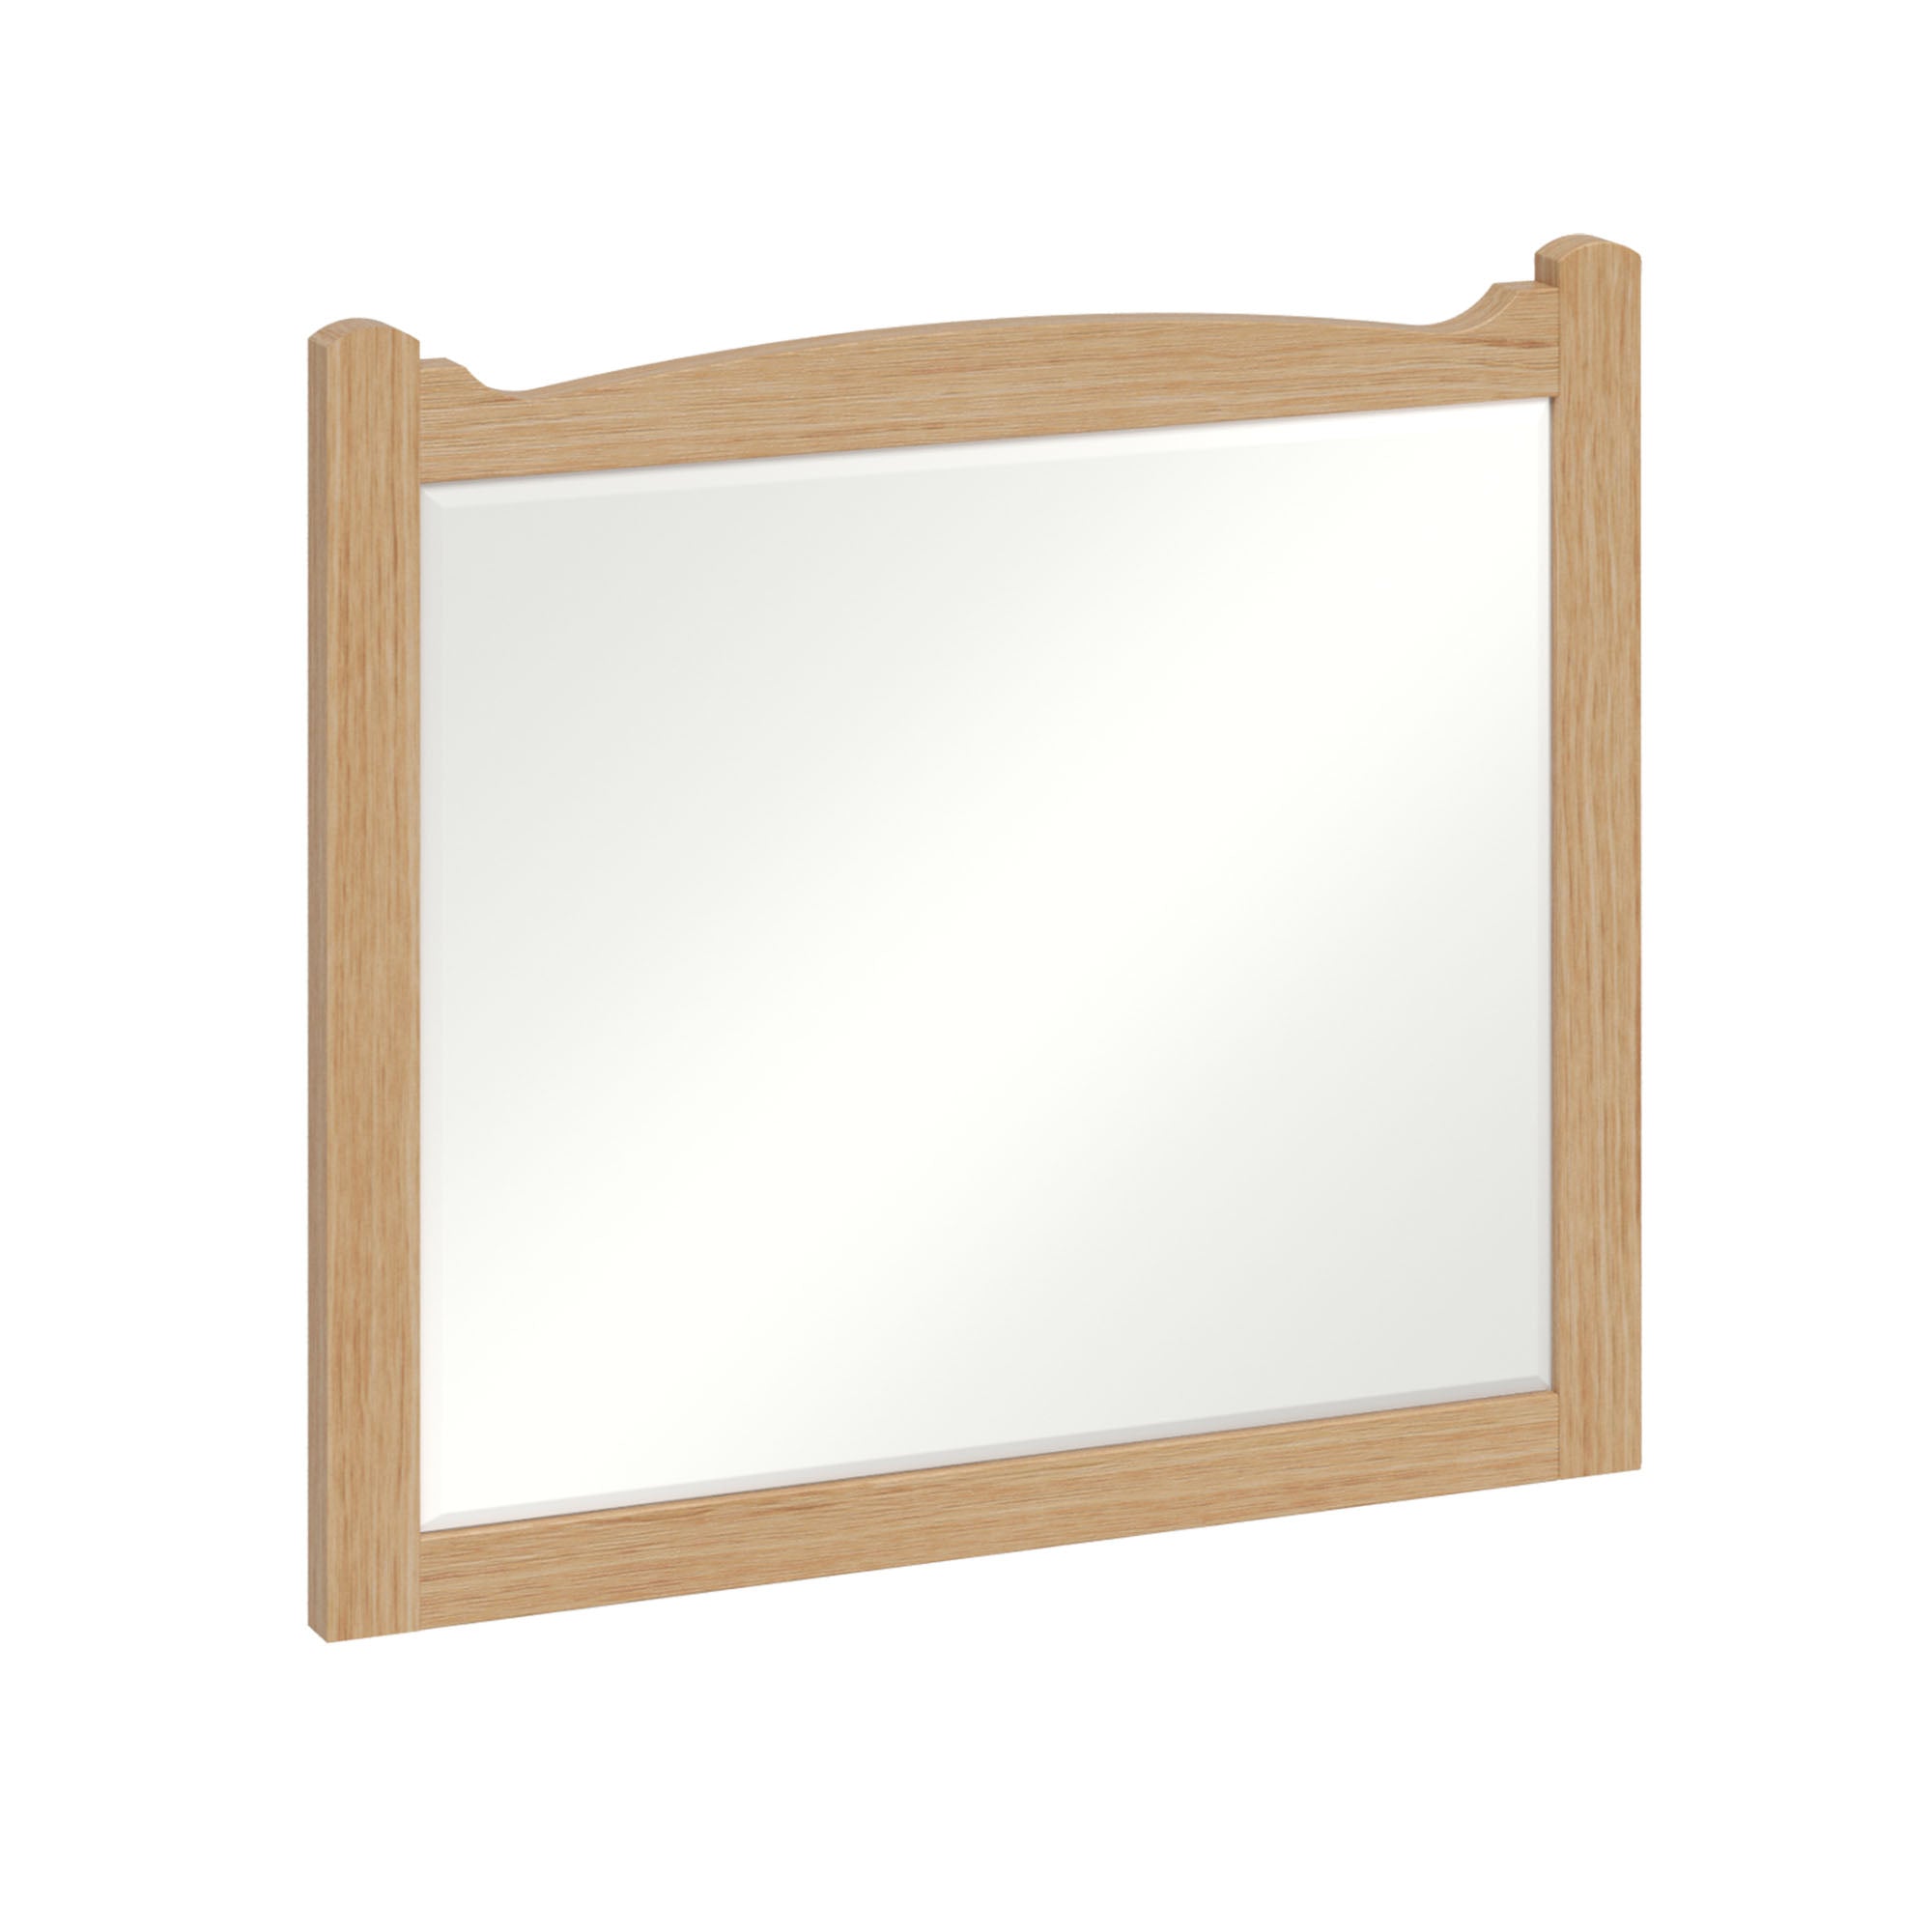 burlington guild 600 framed bathroom mirror light oak